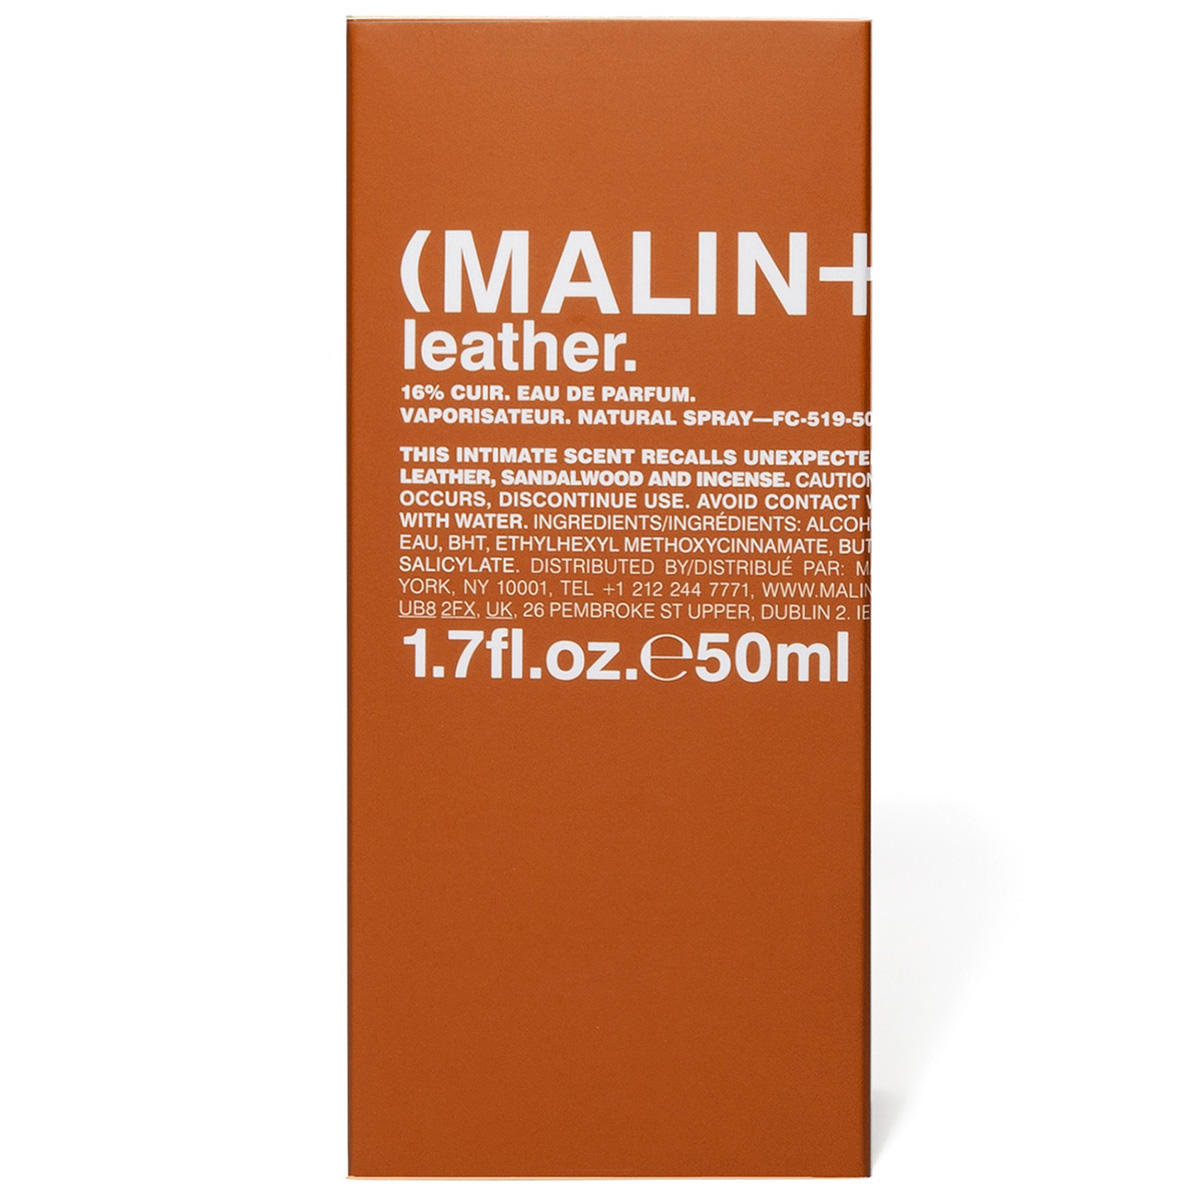 (MALIN+GOETZ) Leather Eau de Parfum 50 ml - 3